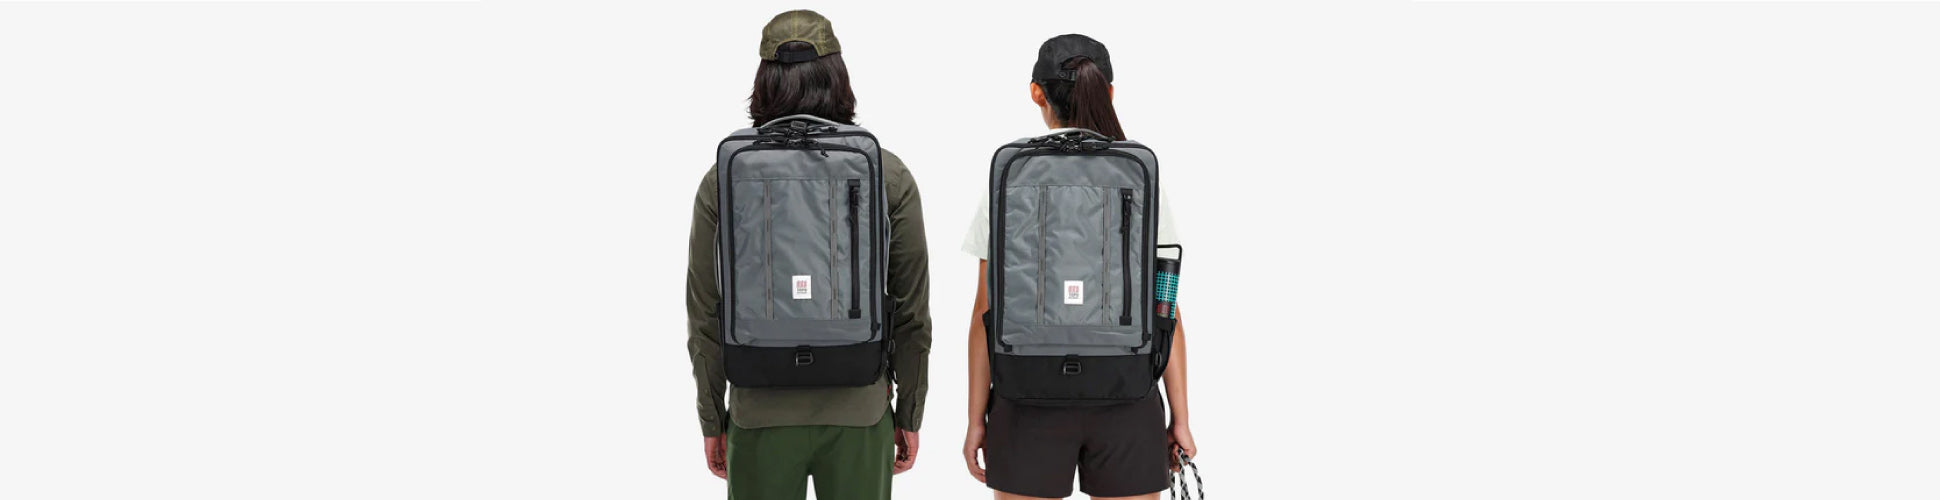 Sacs a dos accessoires sacs de voyages Topo Designs